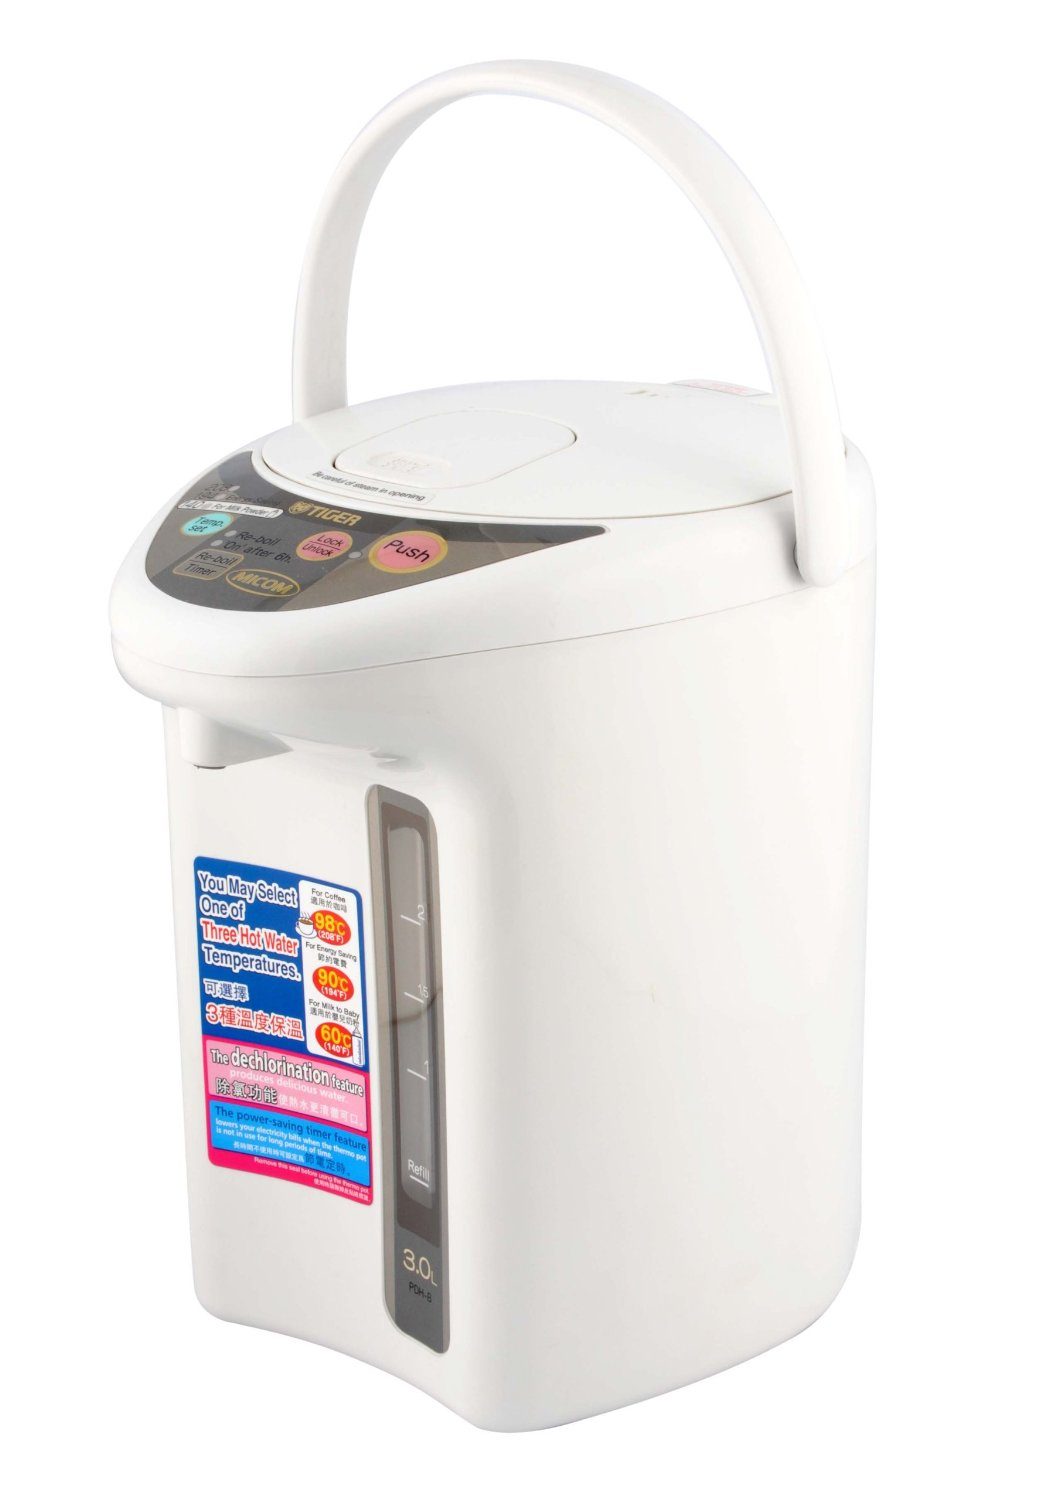 Costco] Tiger 3L water dispenser $69.97 in Costco - RedFlagDeals